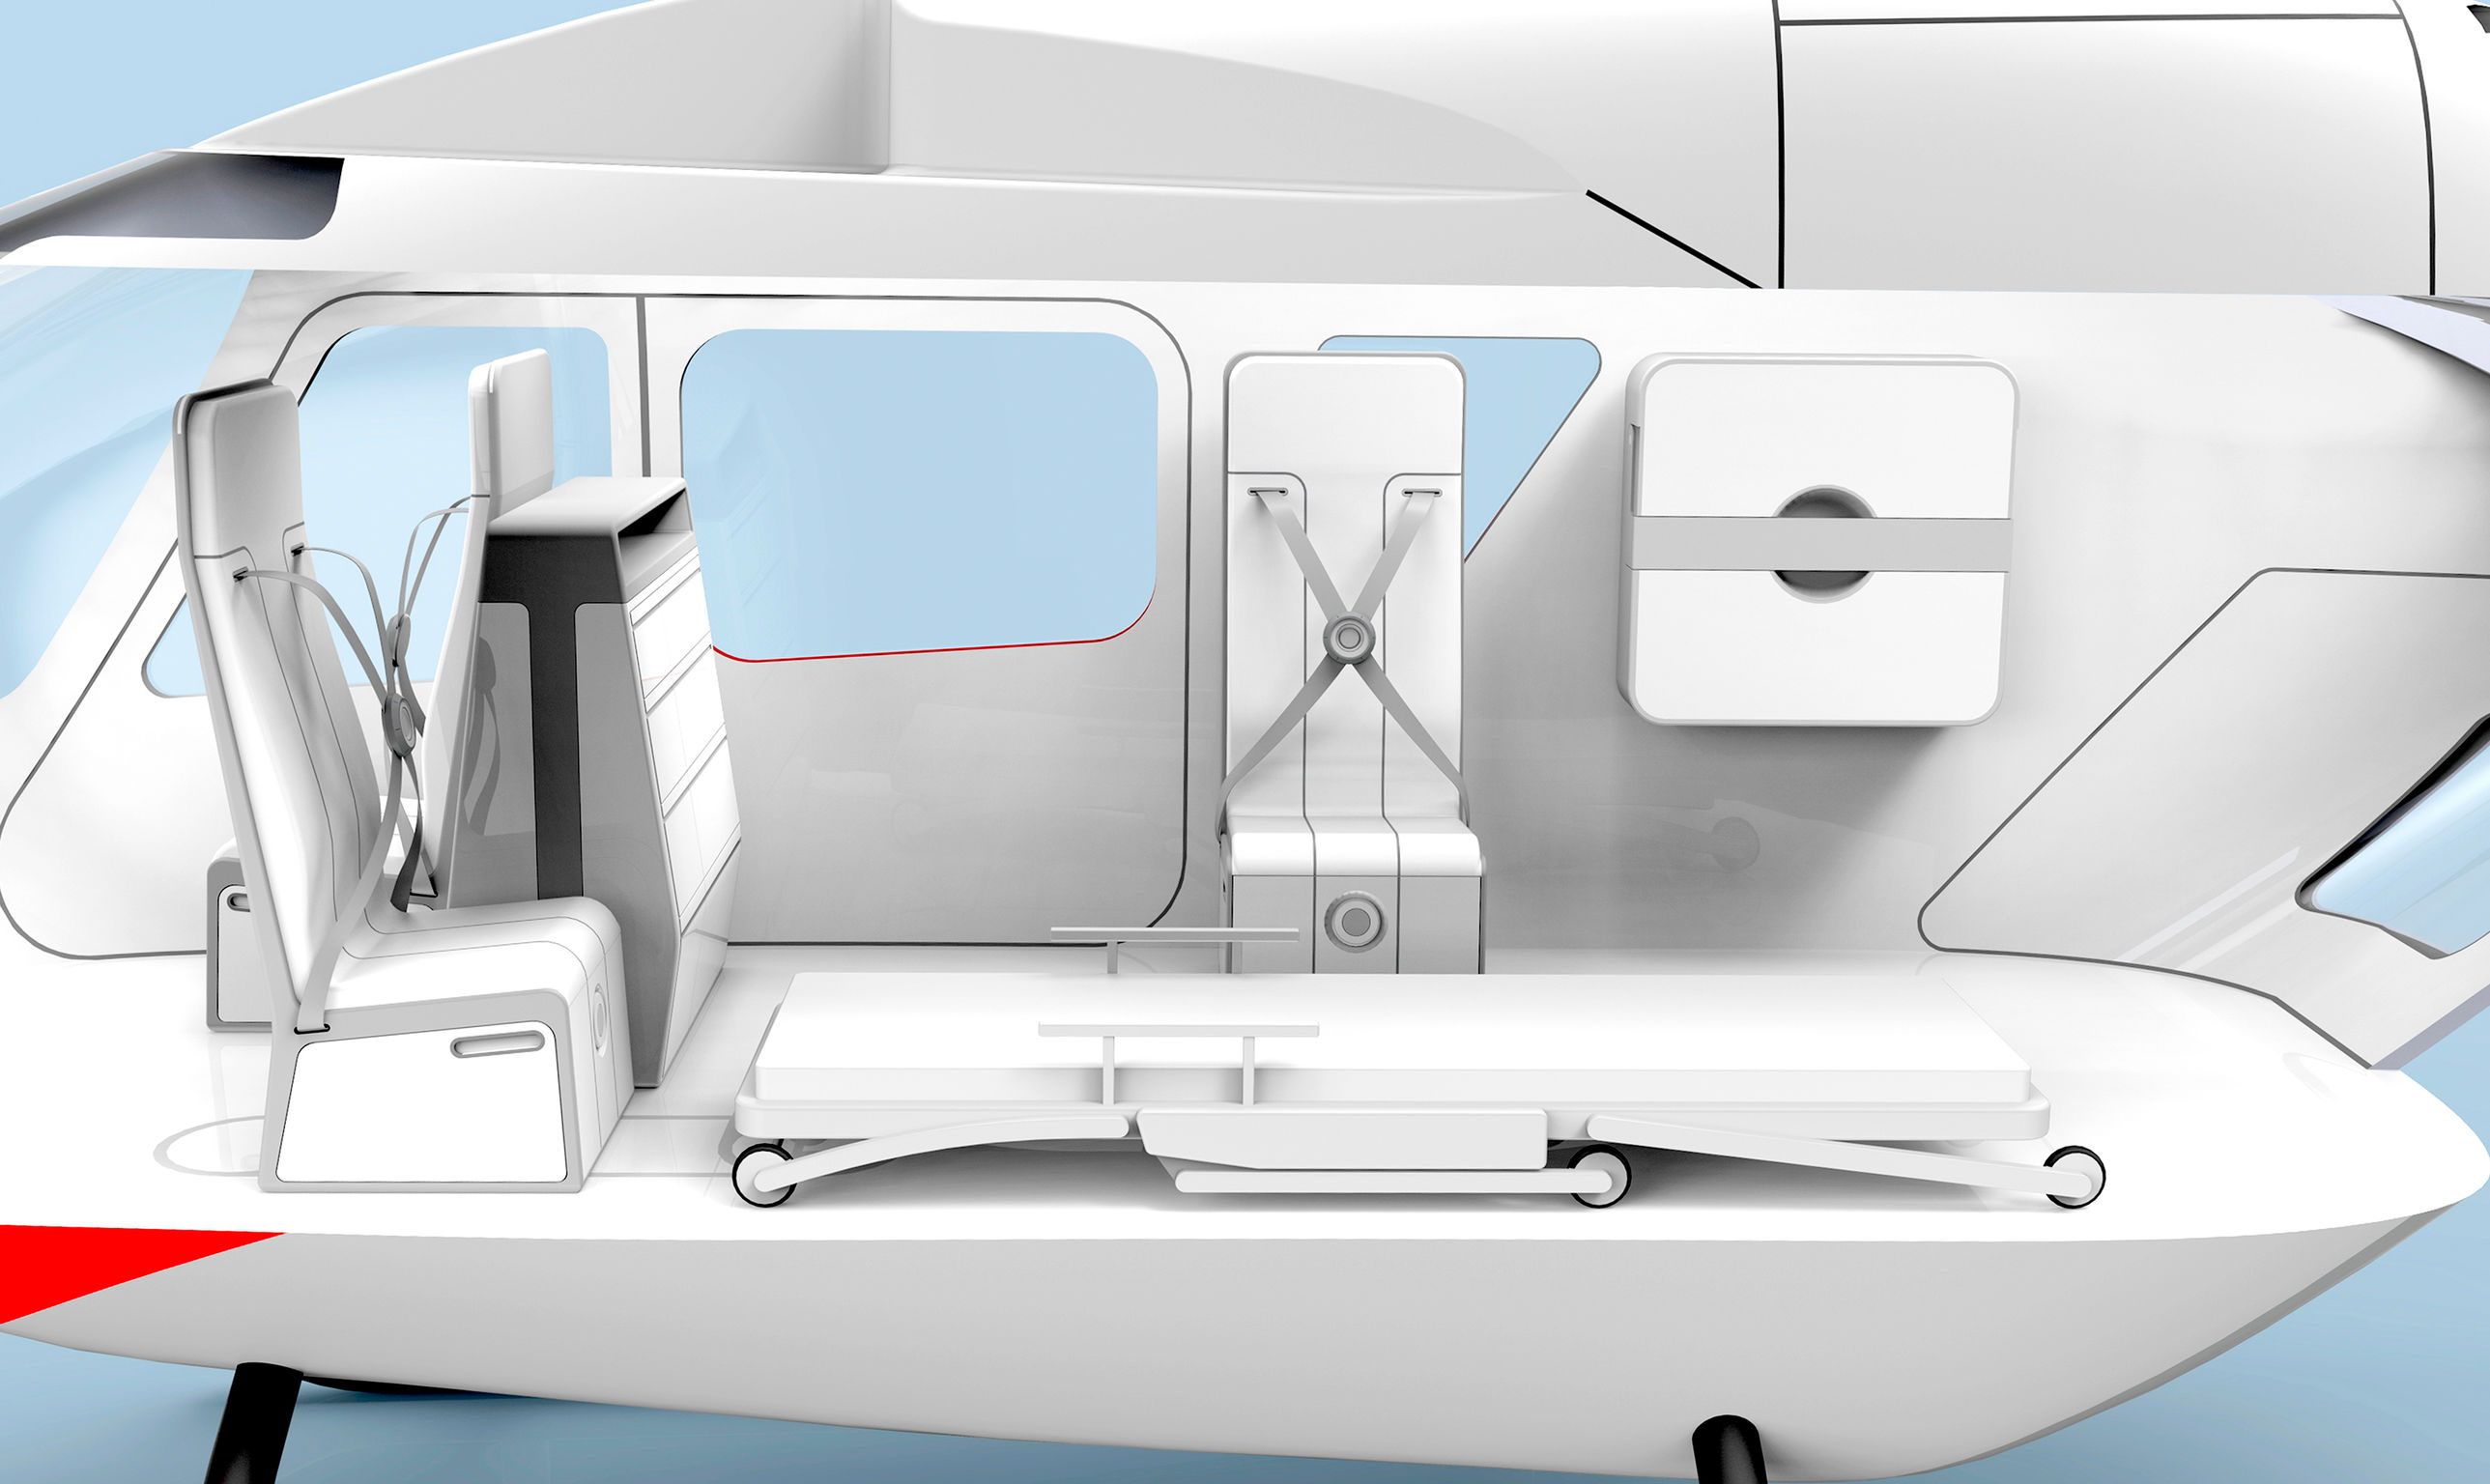 Air Ambulance Interior If World Design Guide